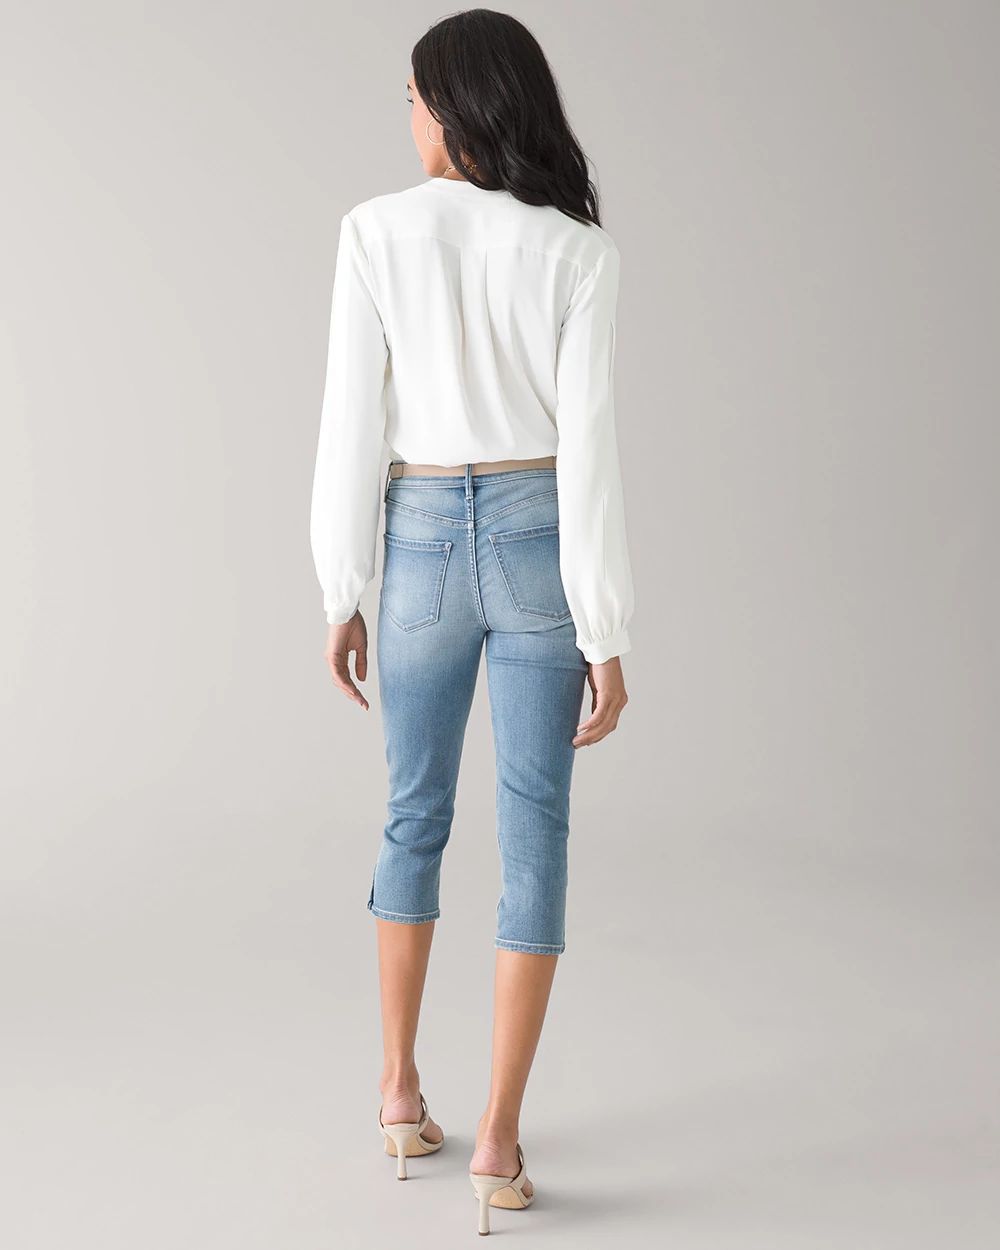 High-Rise Everyday Soft Denim™ Button Hem Slim Capri Jeans click to view larger image.